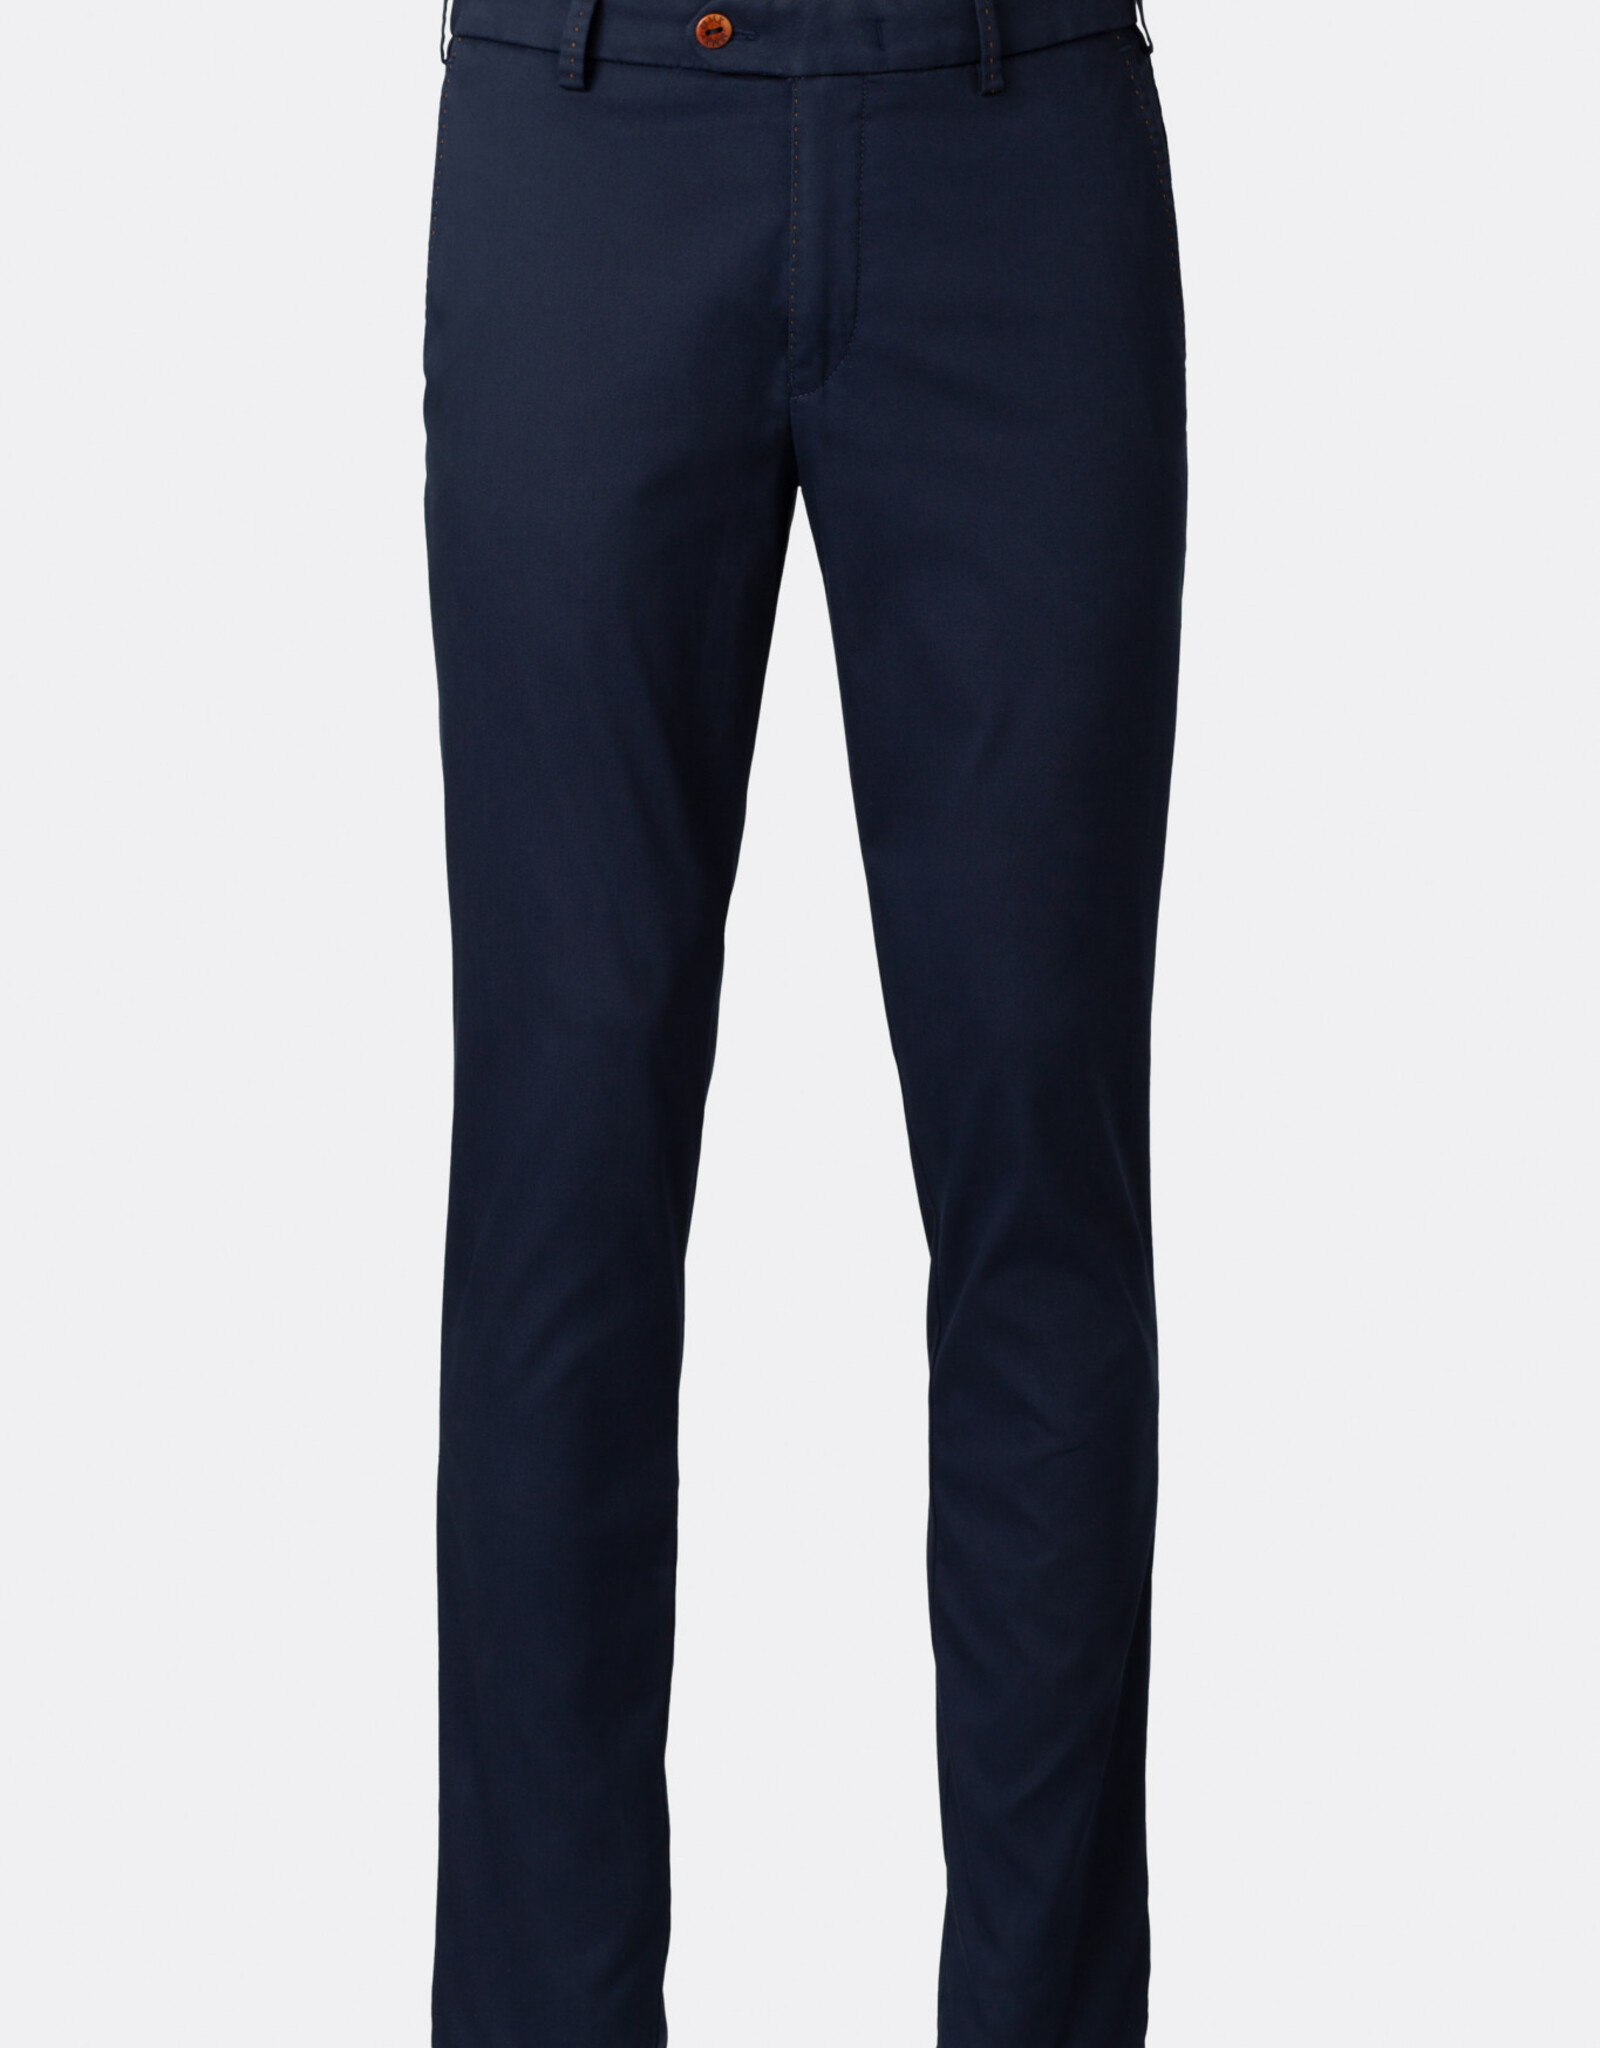 MMX MMX trousers cotton blue Lupus 7380/18